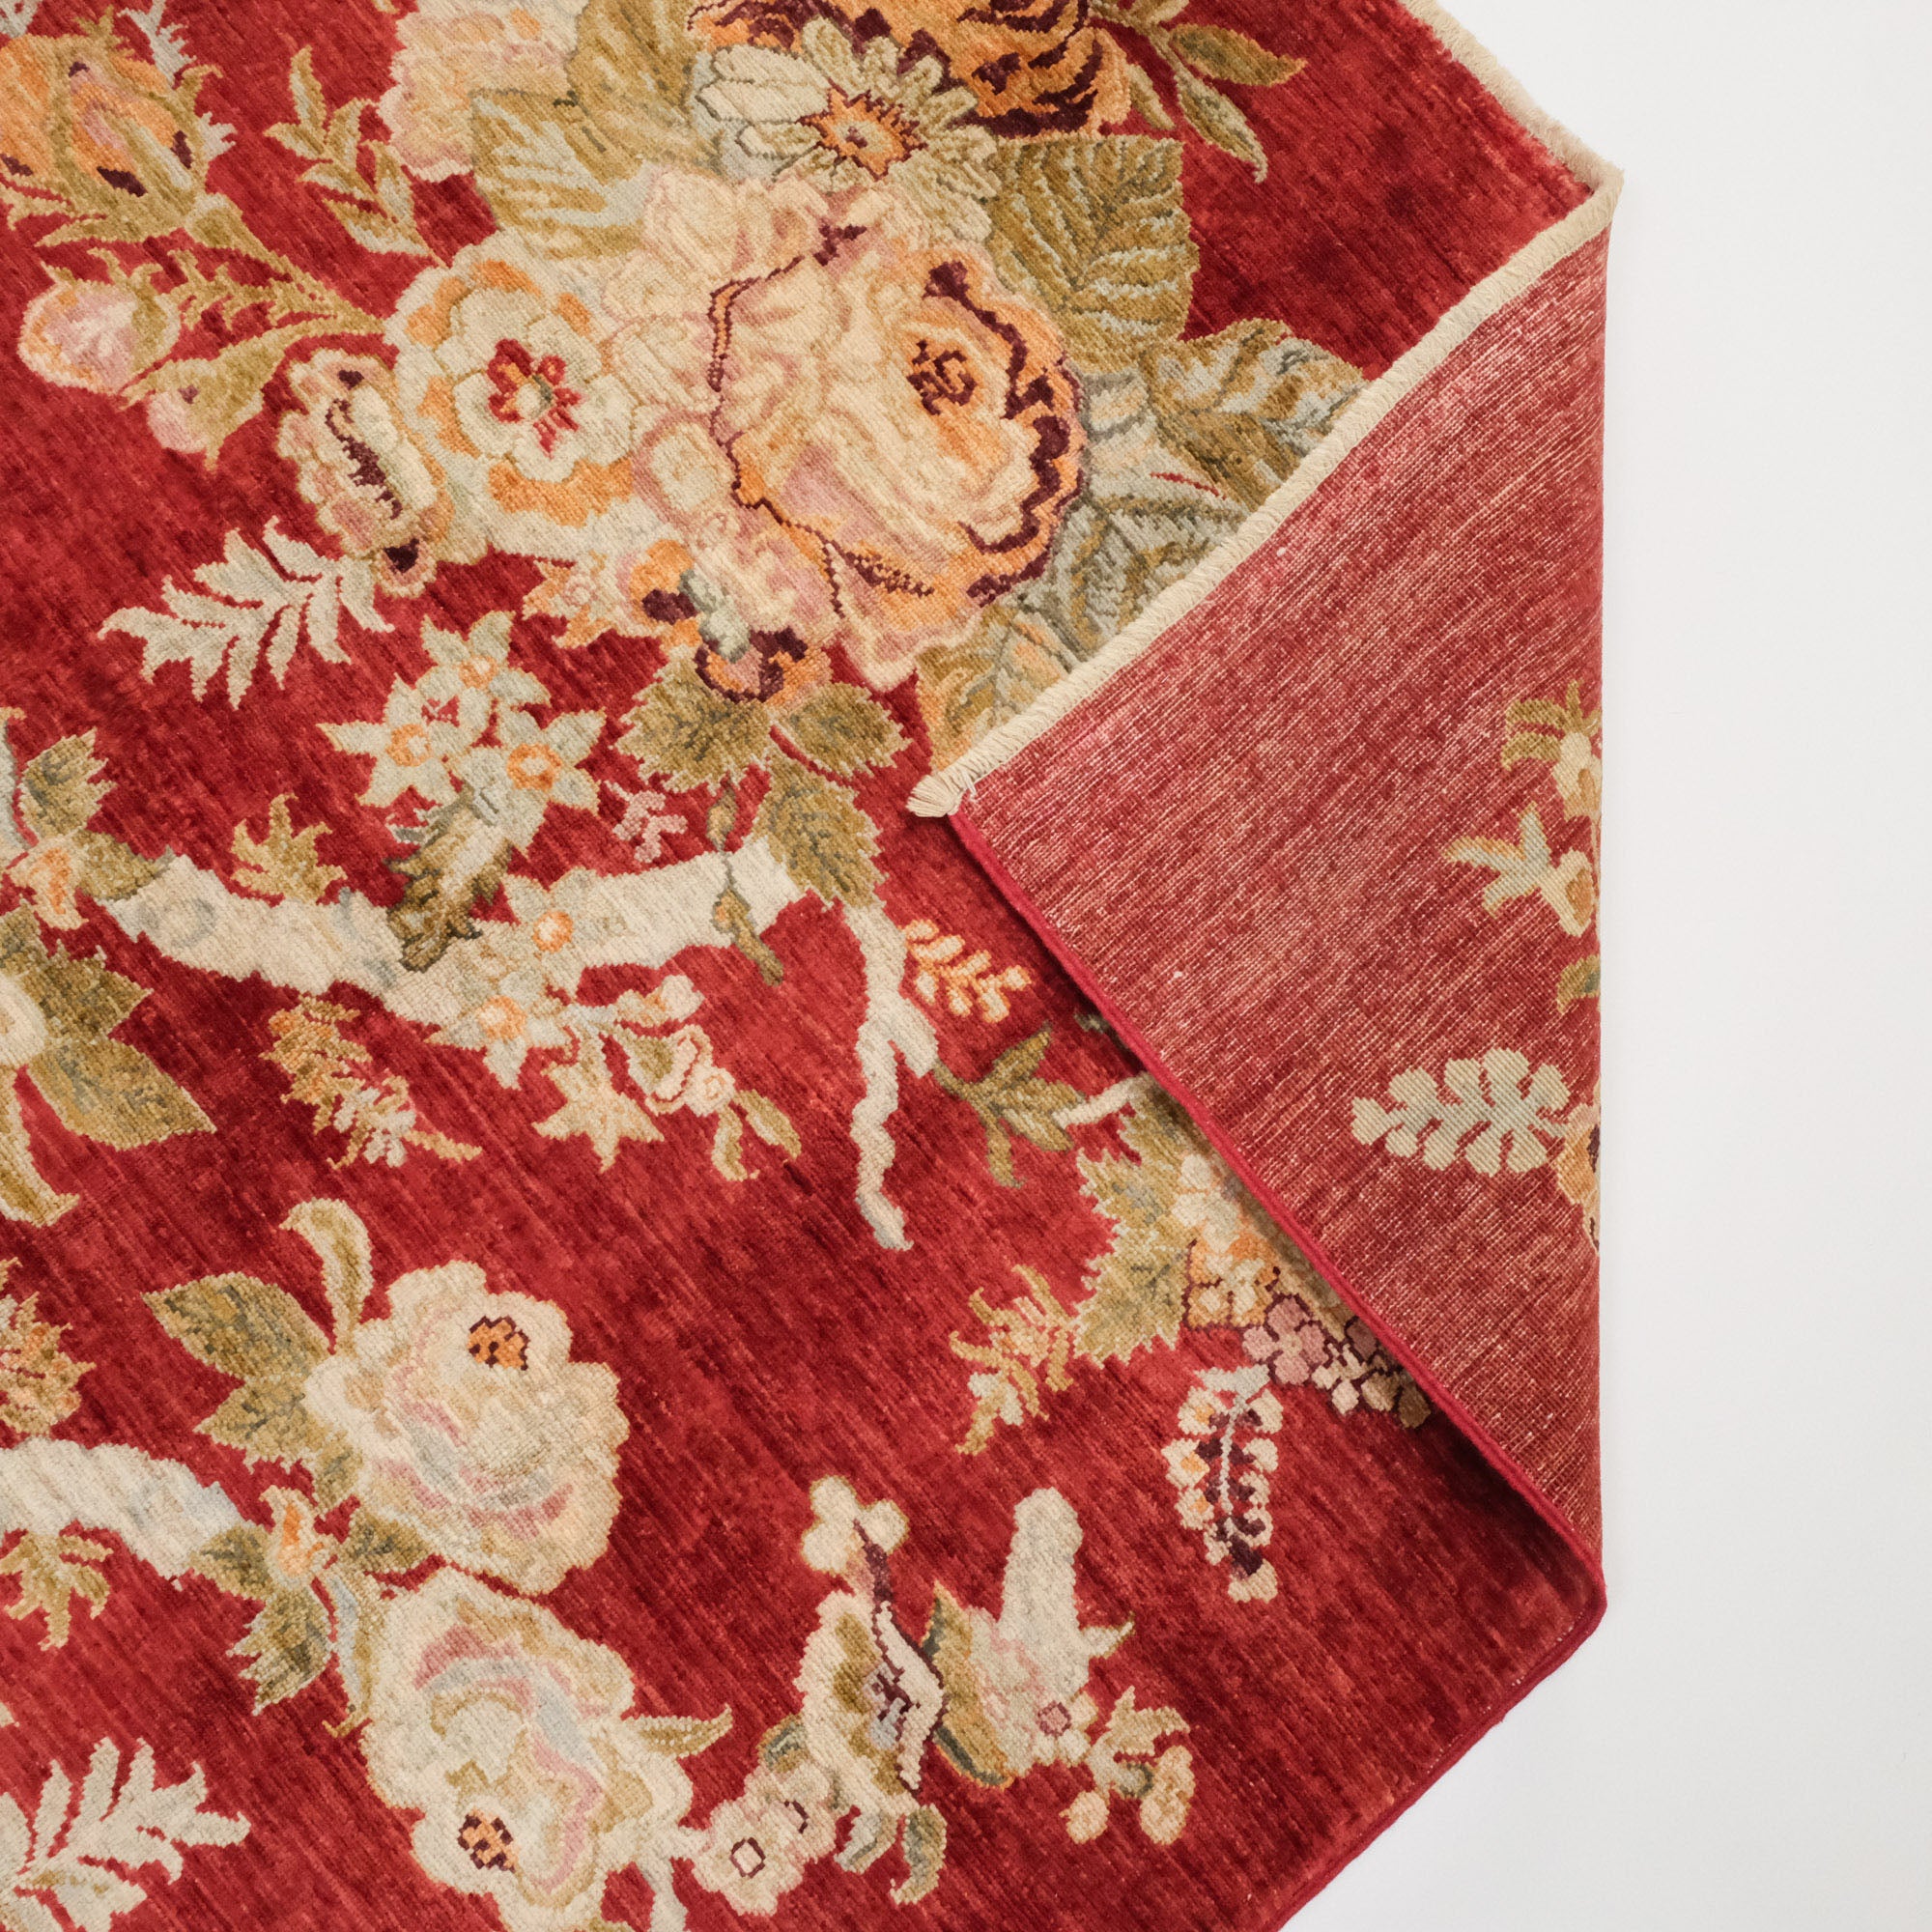 Hand-Woven Karabakh Patterned Red Wool Carpet